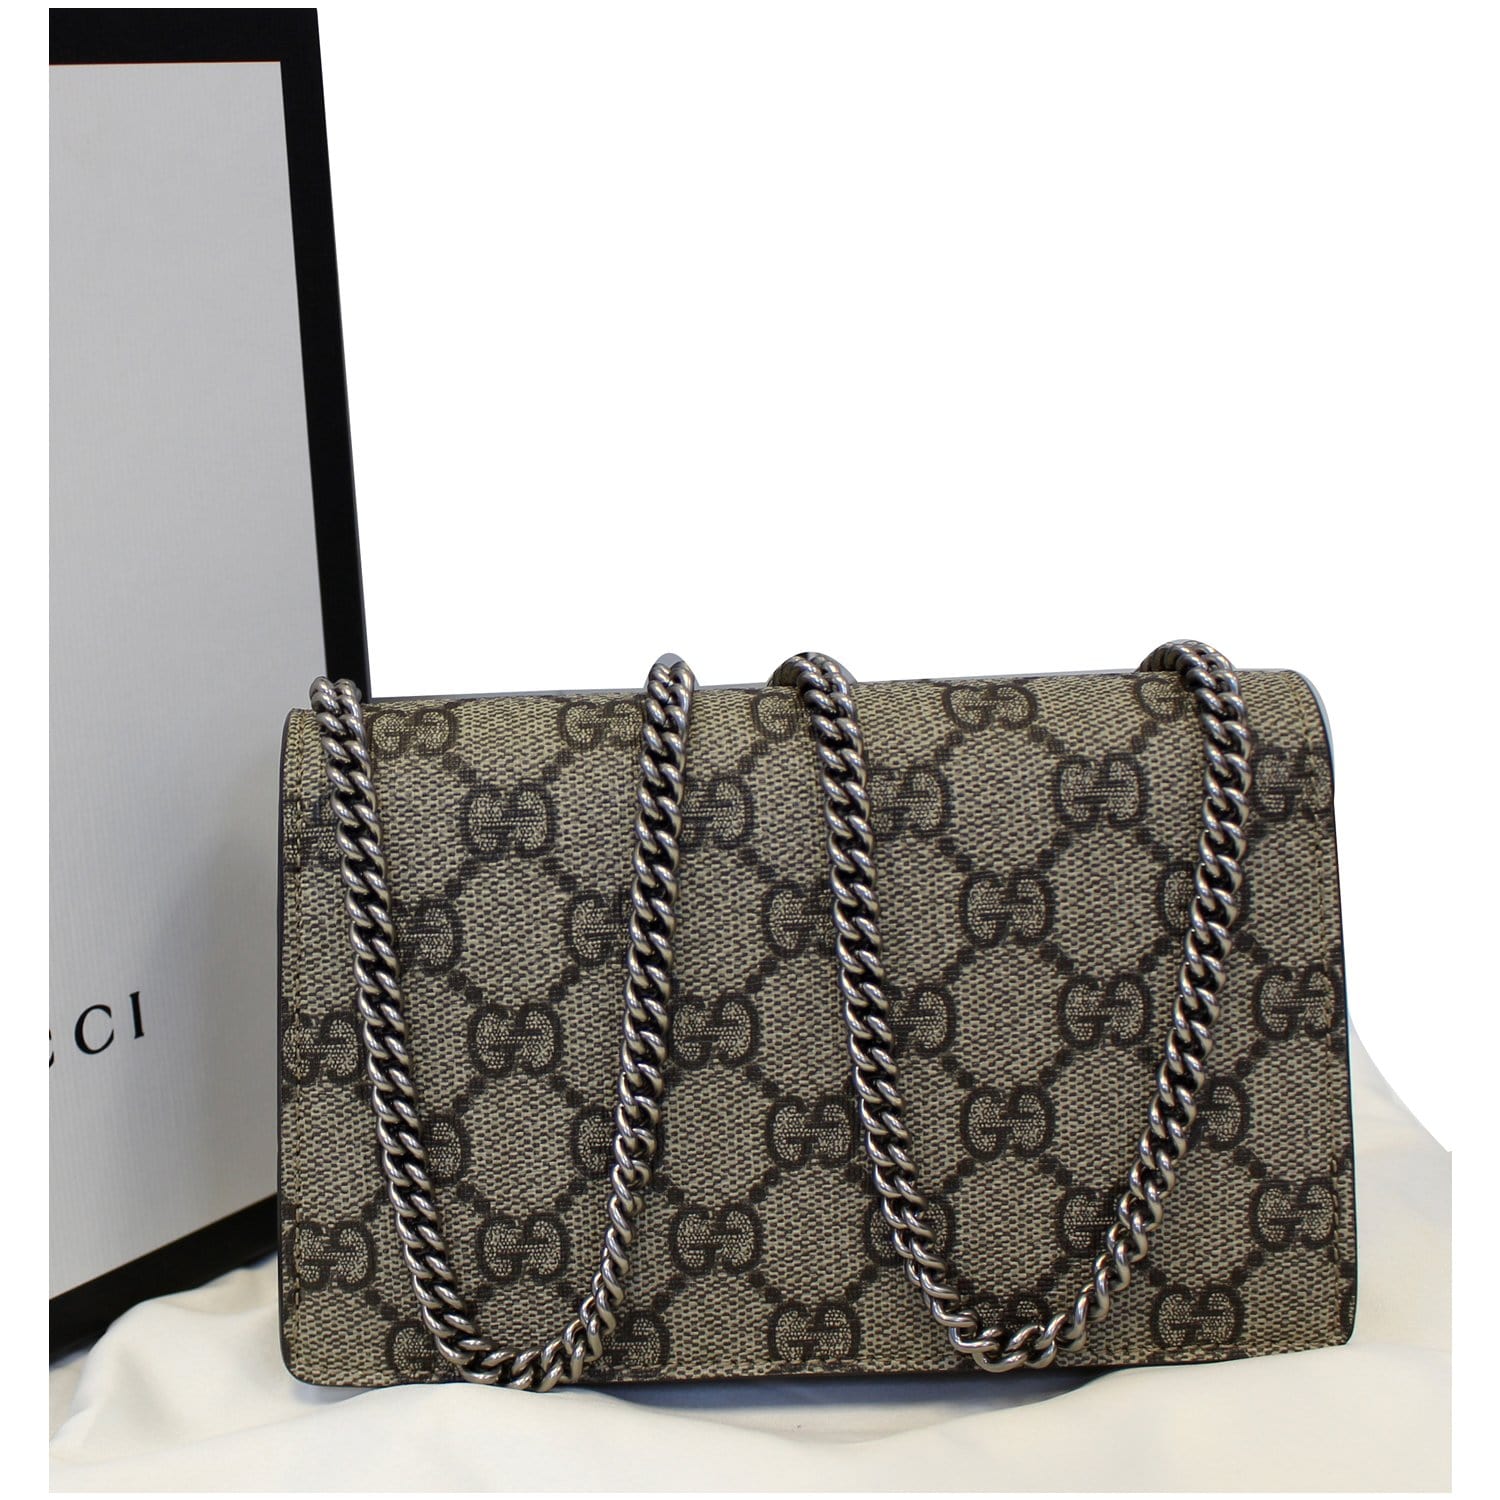 Gucci Dionysus GG Supreme Chain Shoulder Bag